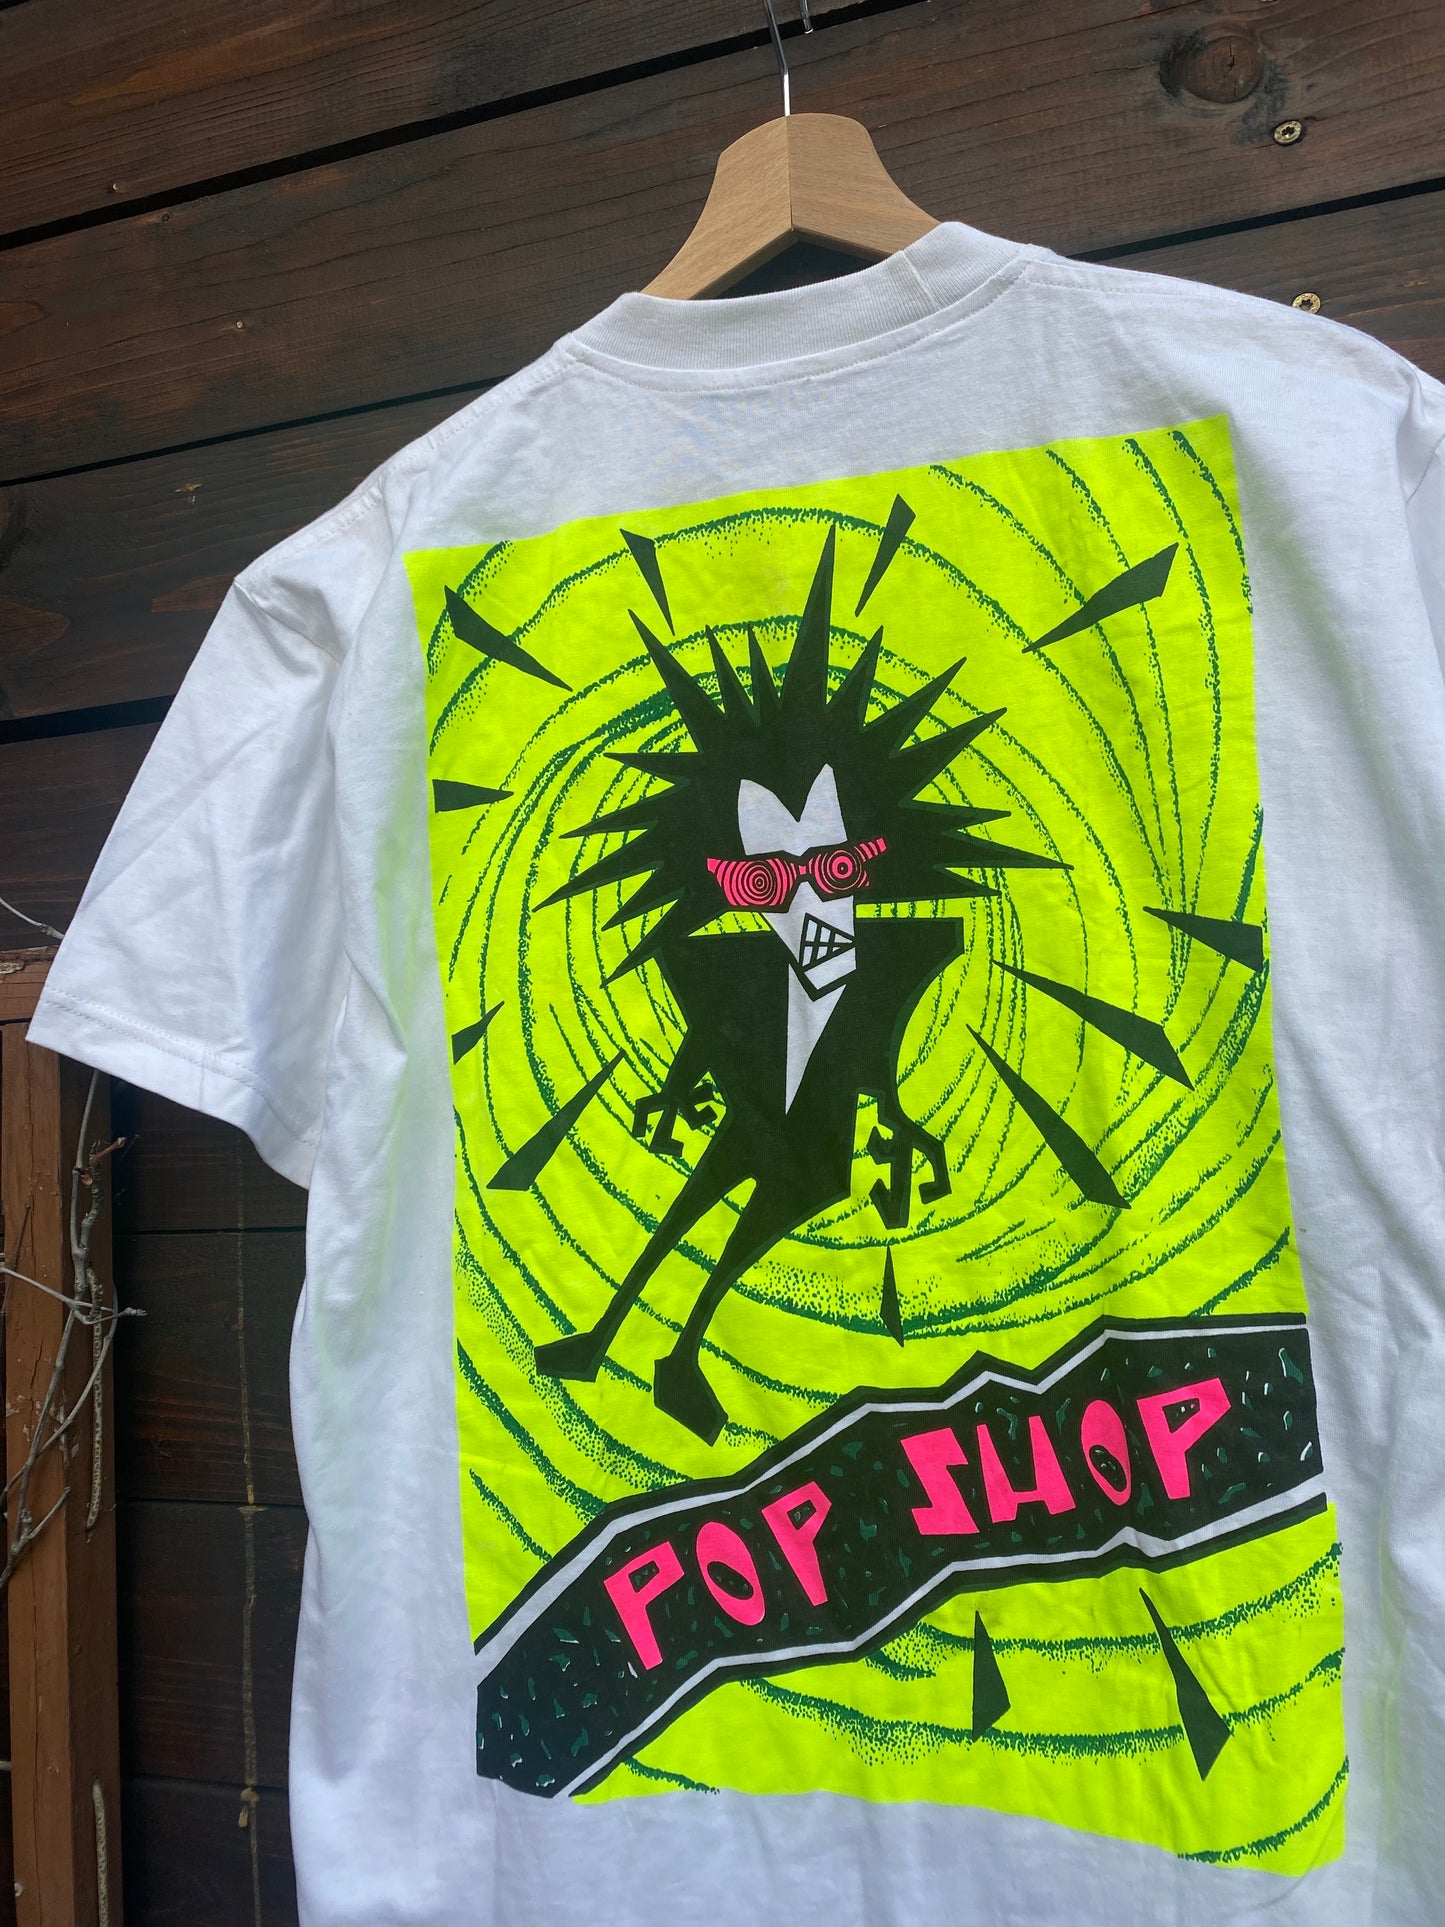 Vintage POP shop Keith Haring - 90s t-shirt - size L